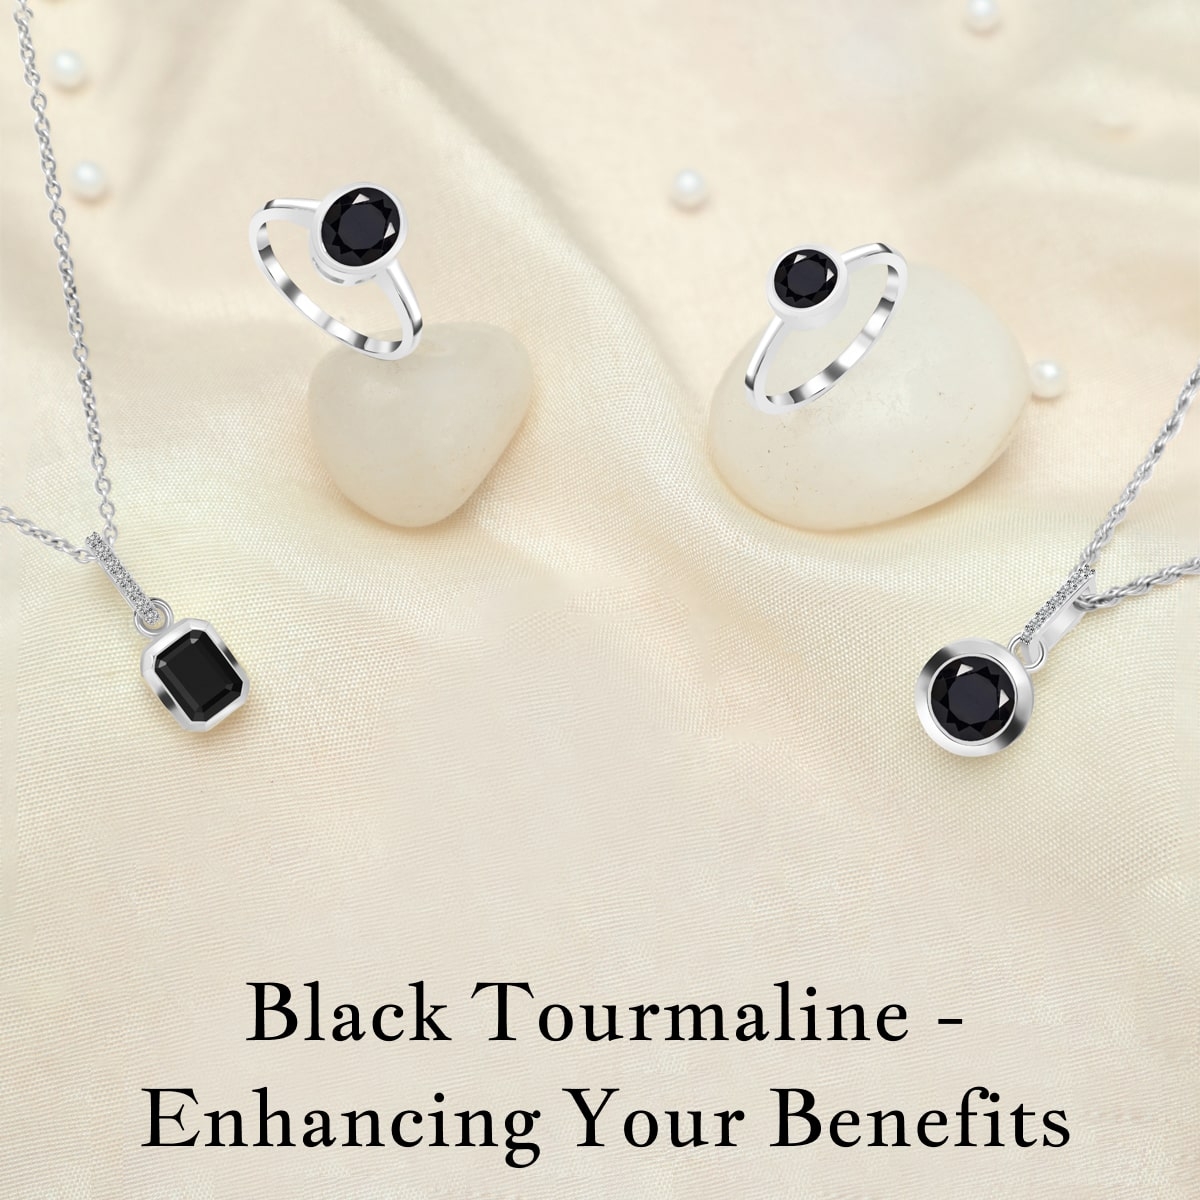 Benefits of Black Tourmaline Jewel